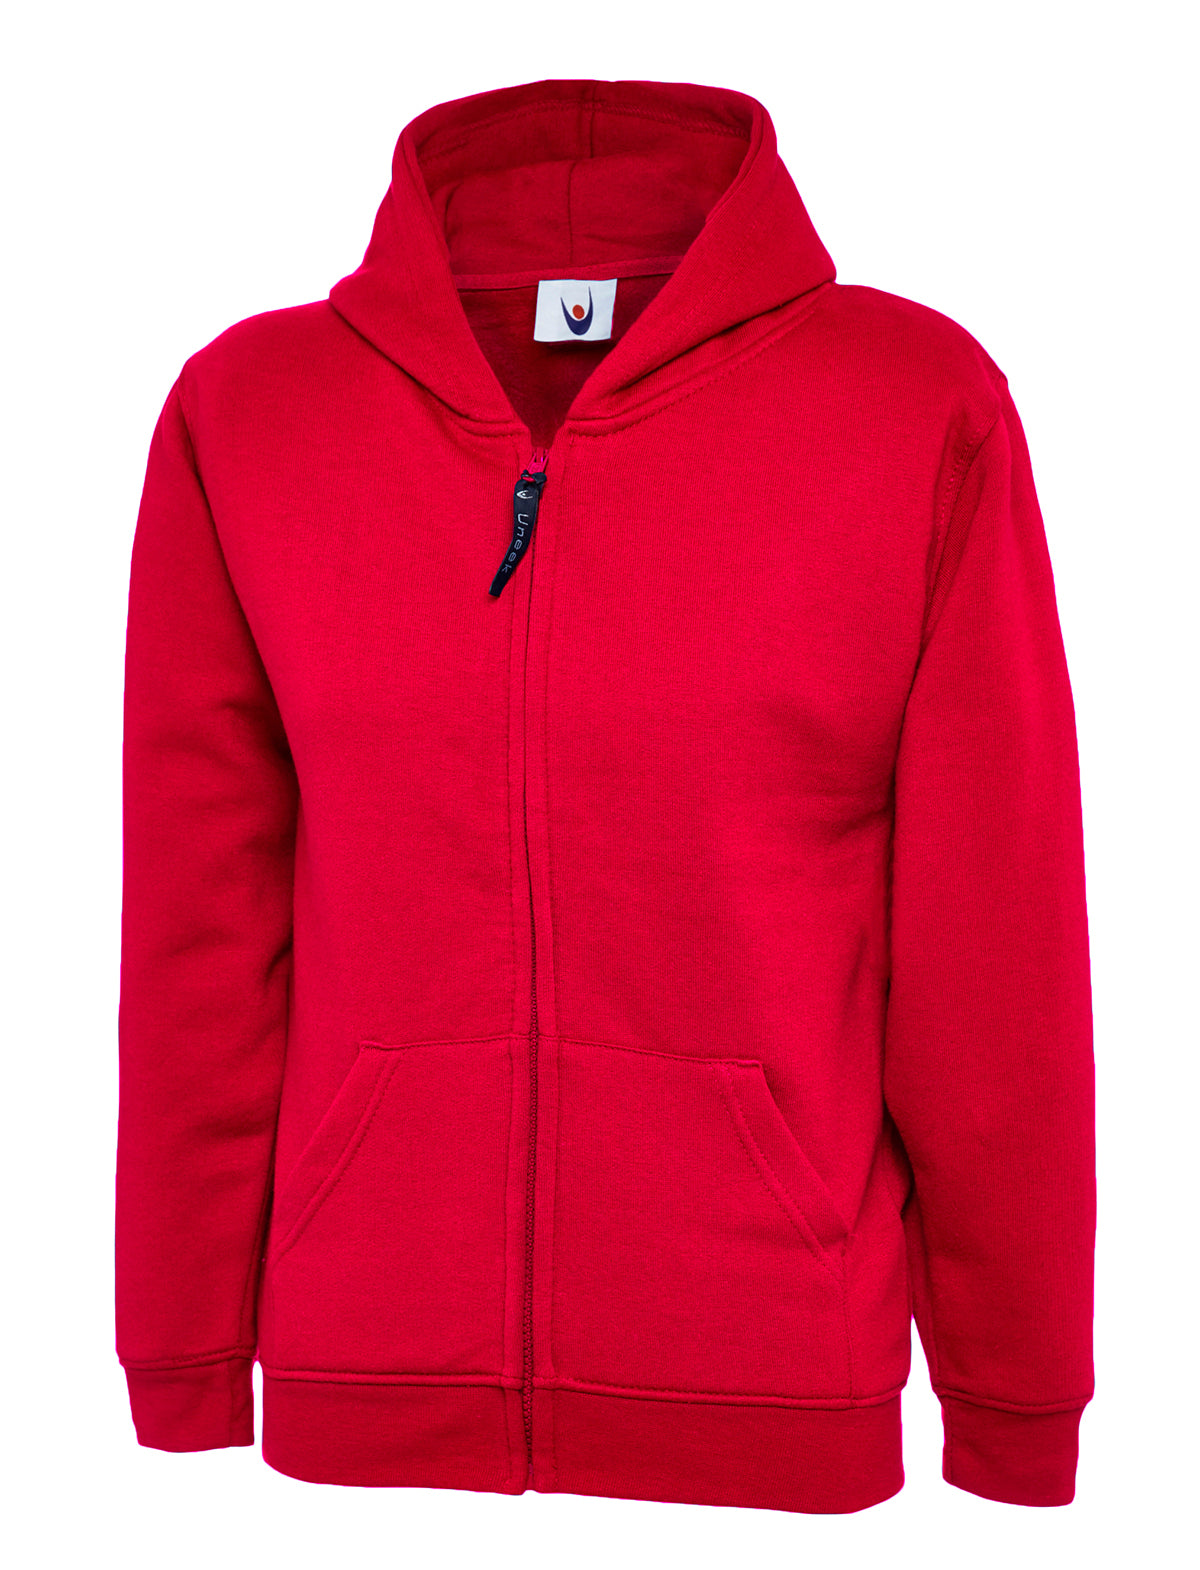 Uneek Childrens Classic Full Zip Hooded Sweatshirt UC506 - Red